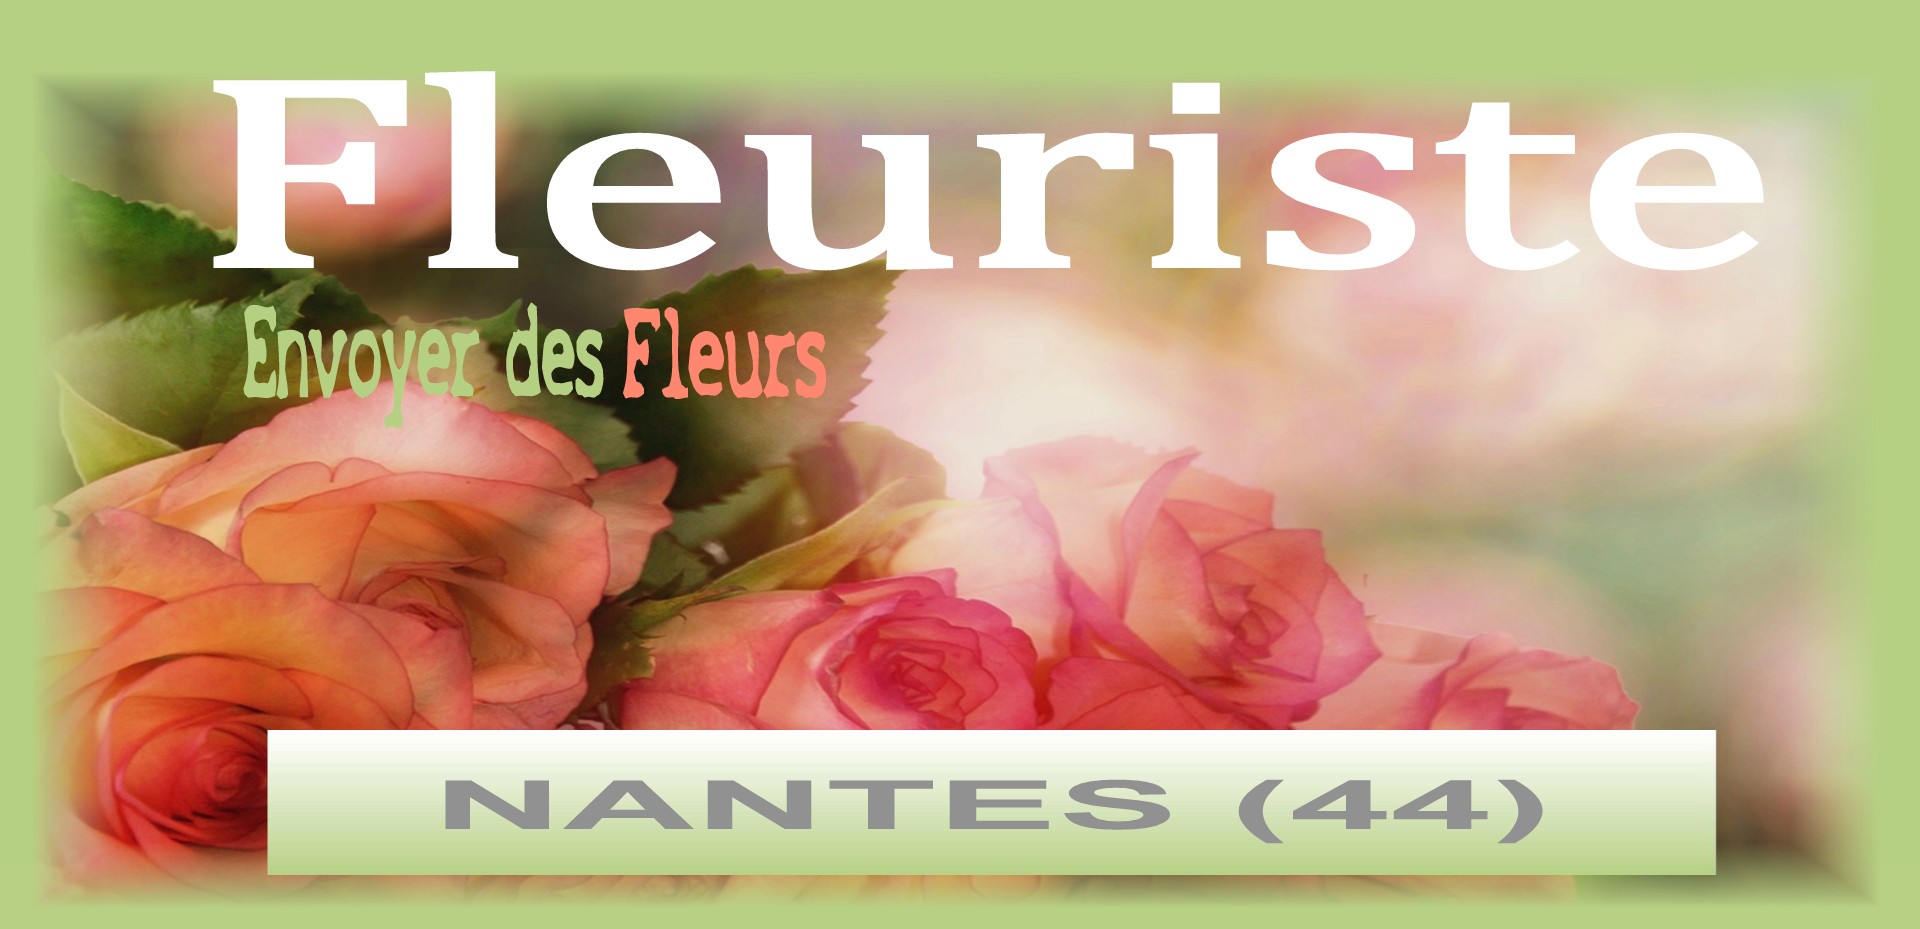 FLEURISTE NANTES (44) - LIVRAISON FLEURS FLEURISTE NANTES (44)